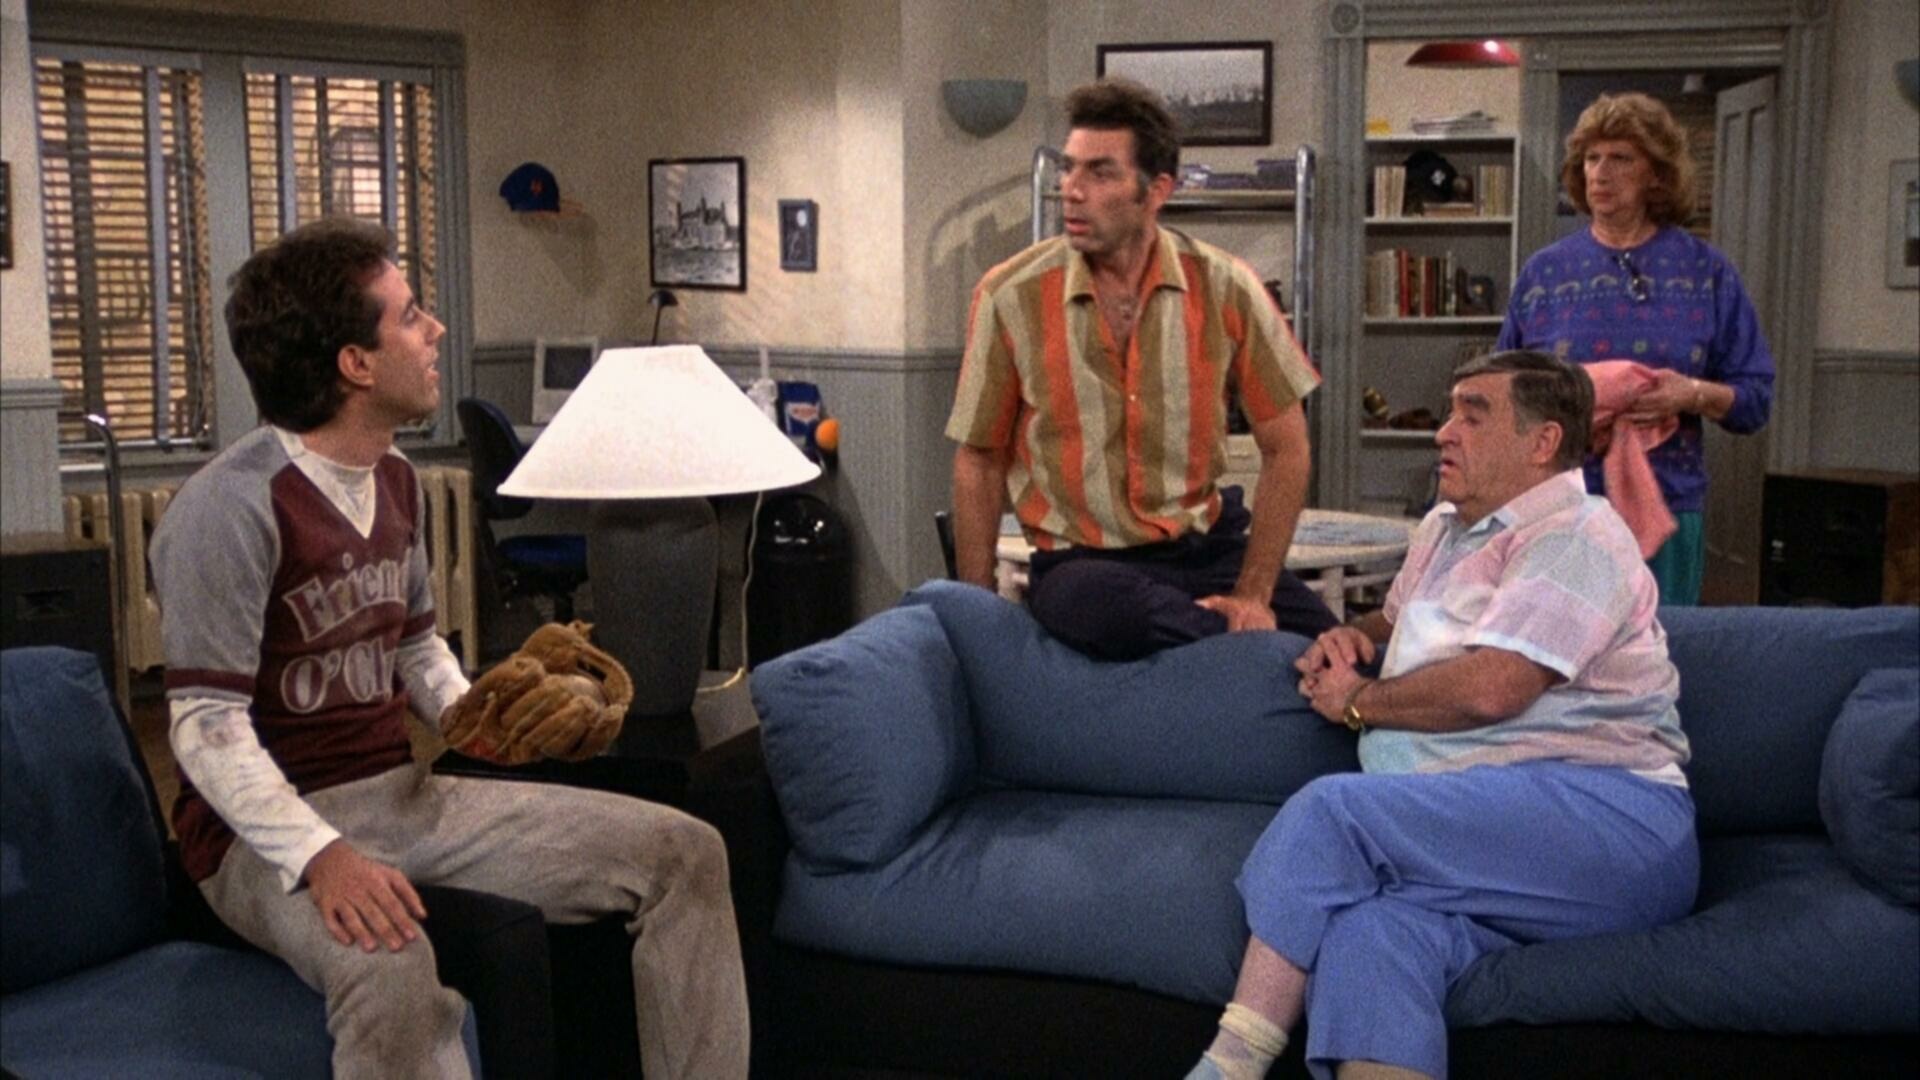 Seinfeld S02E02 The Pony Remark 1080p AMZN WEB DL DDP2 0 H 264 NTb TGx